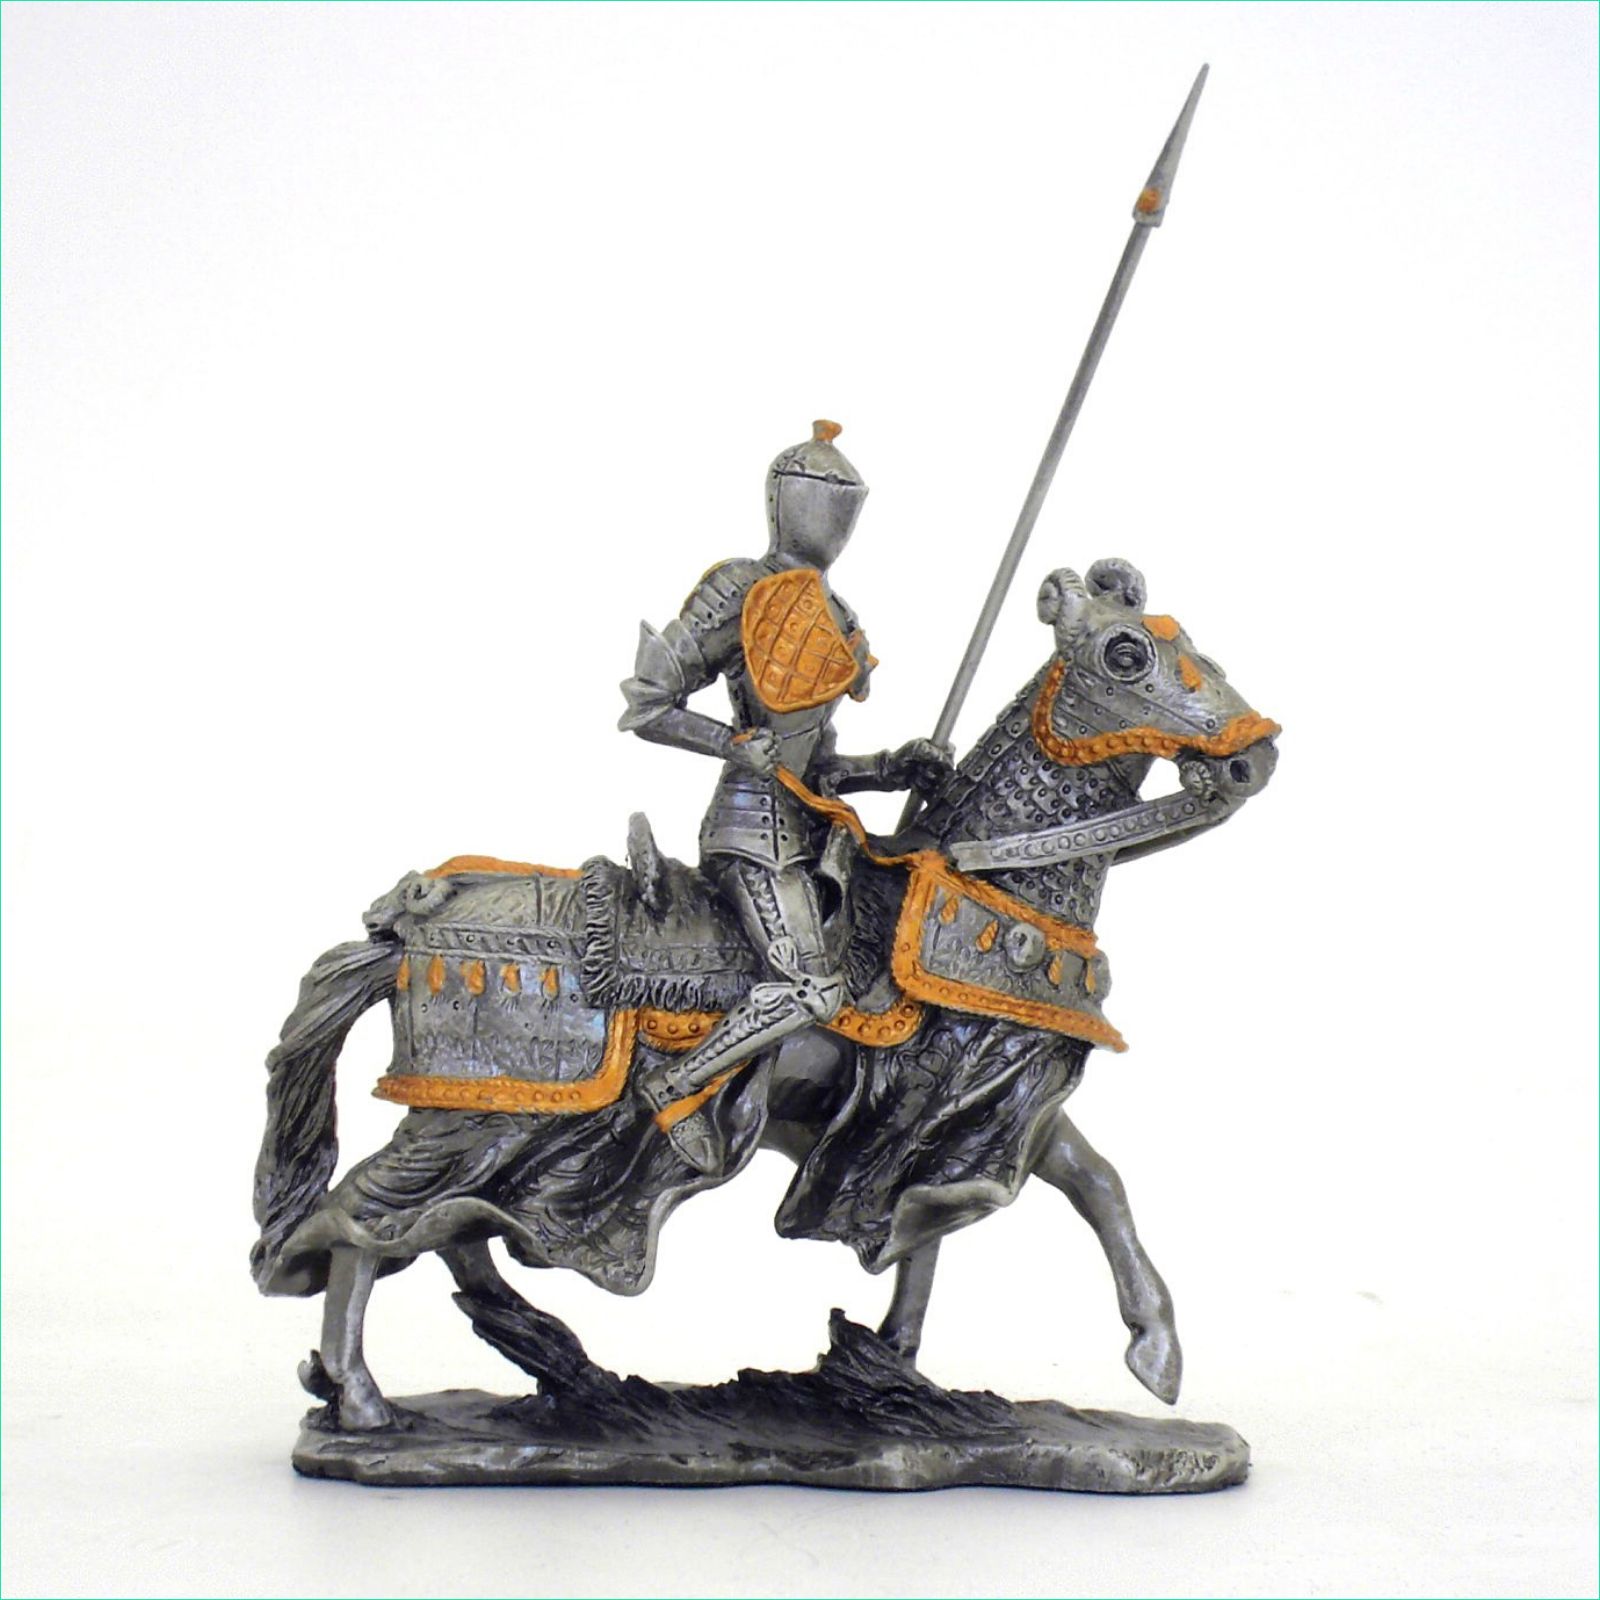 chevalier dueliste periode xiii eme siecle couleur argentee doree arme lance longue portee